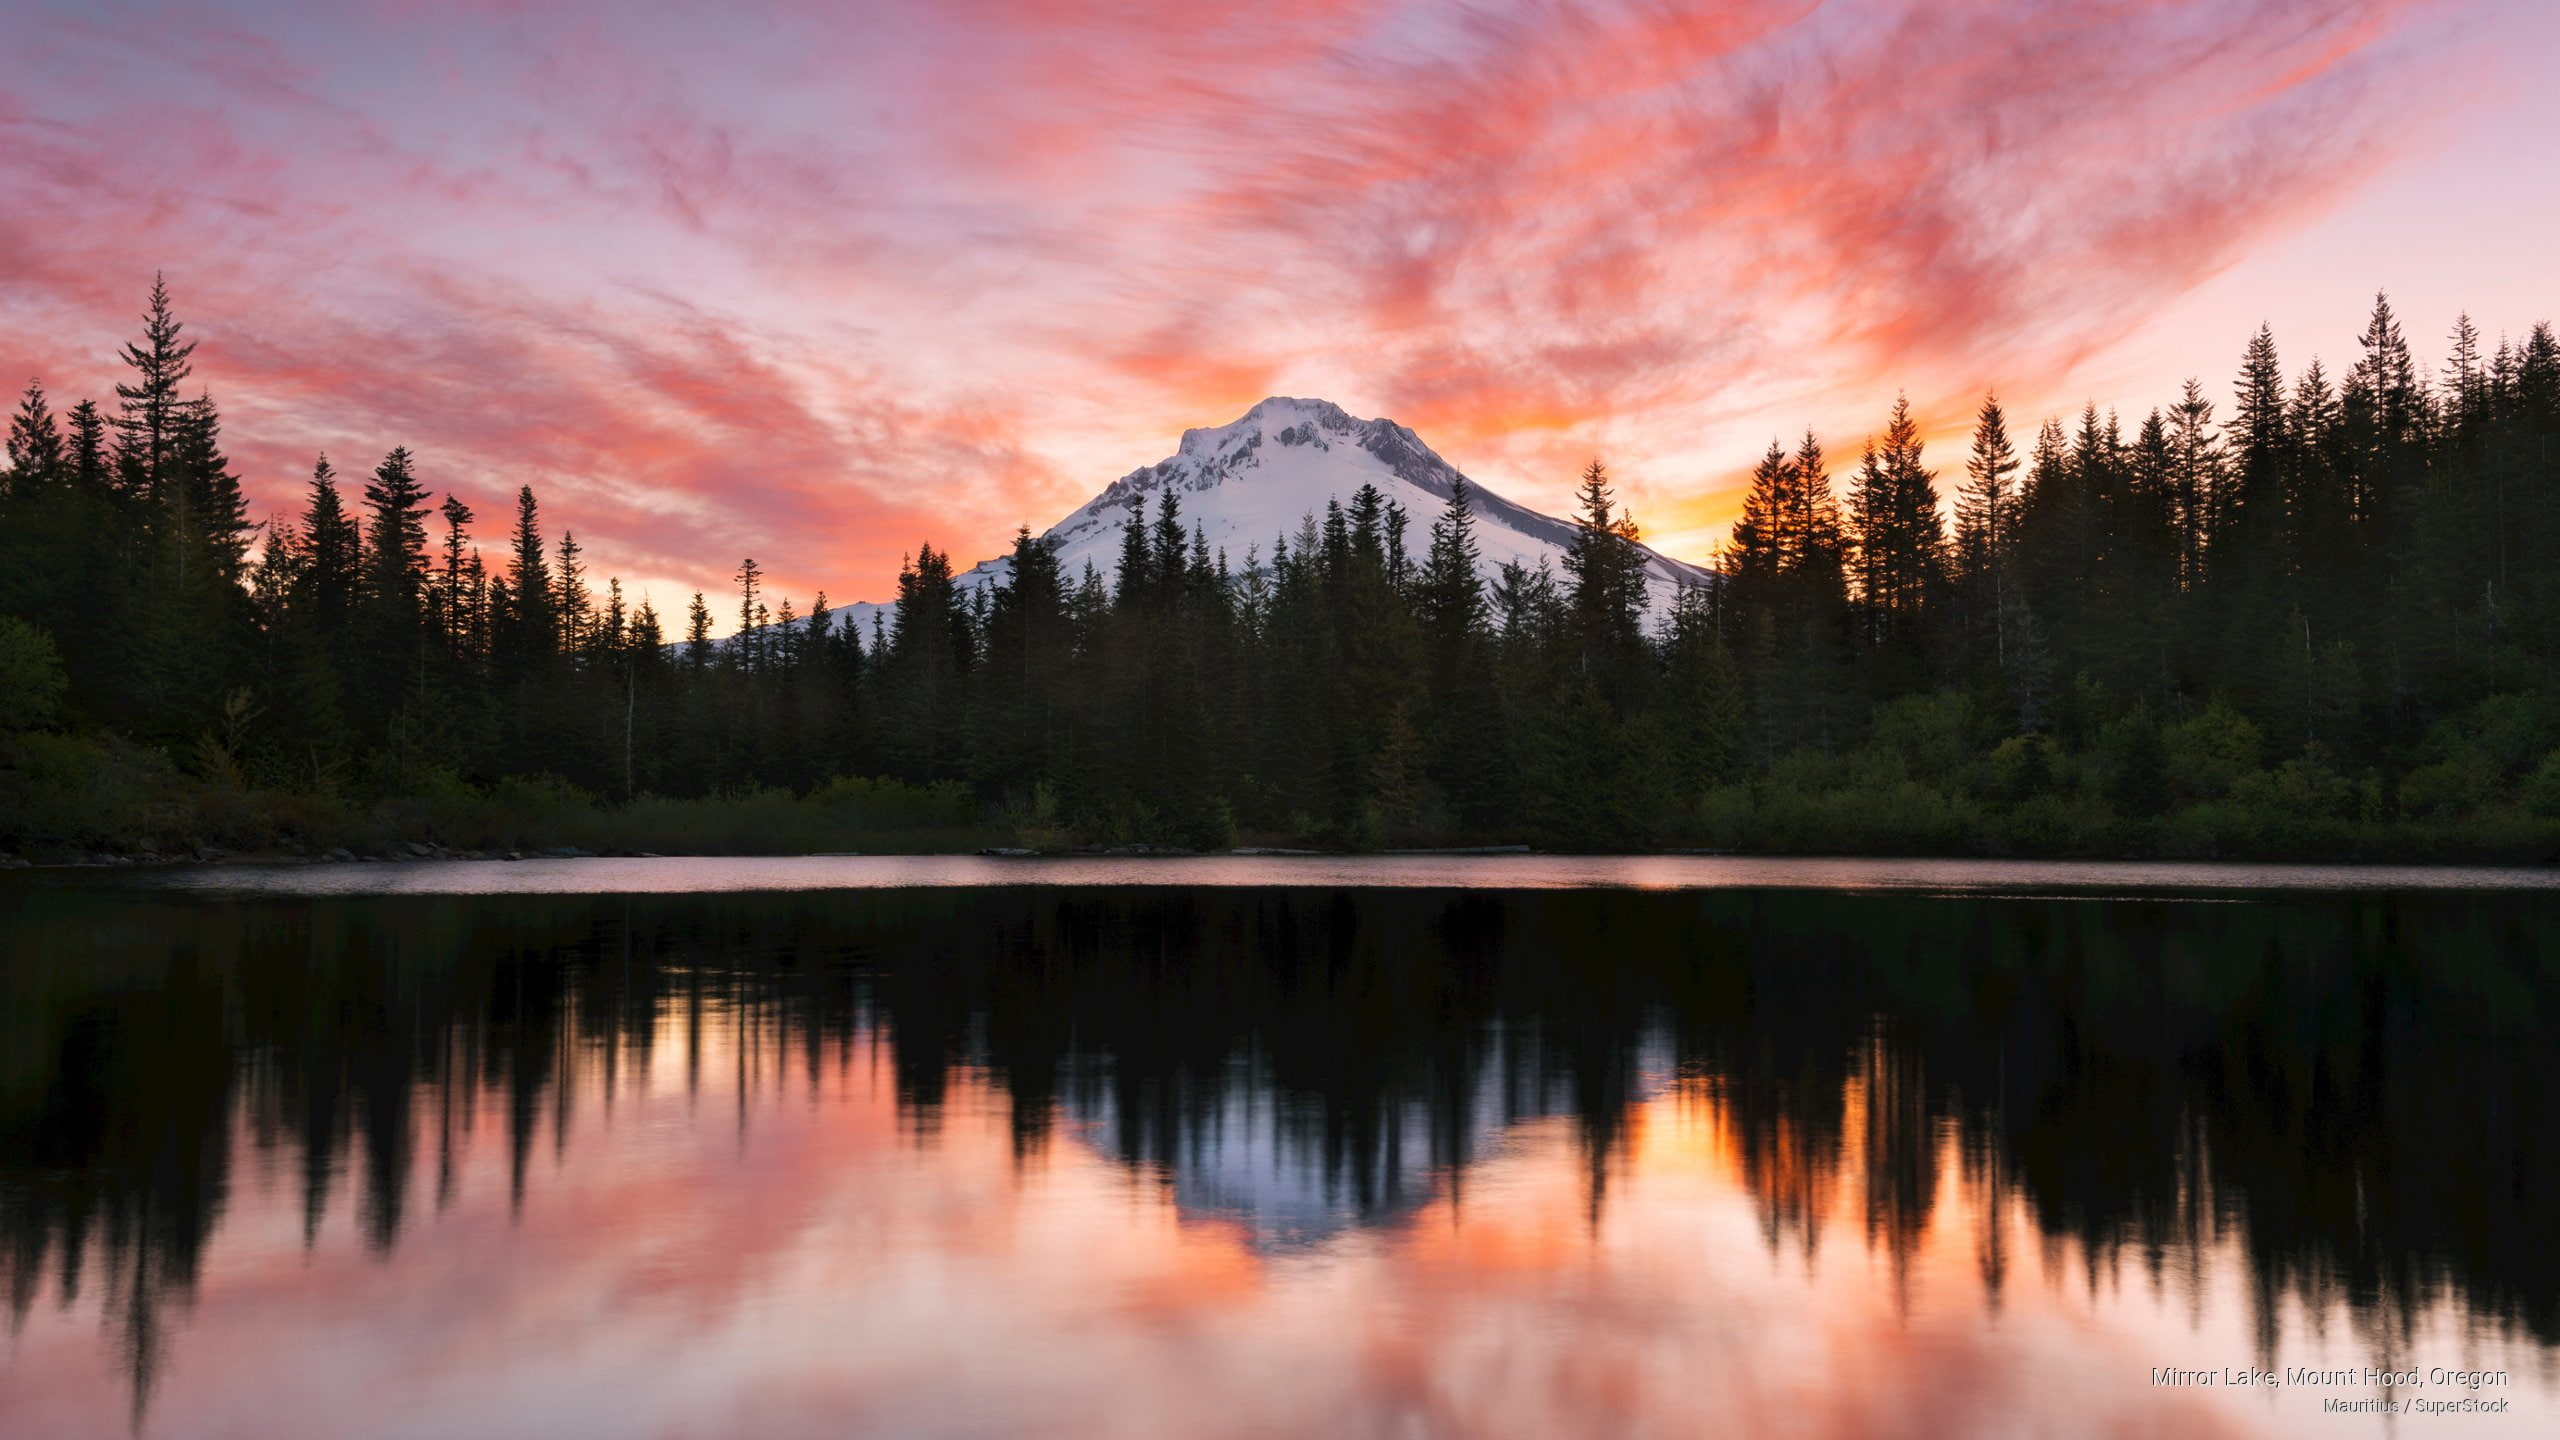 Mirror Lake, Mount Hood, Oregon, Mountains